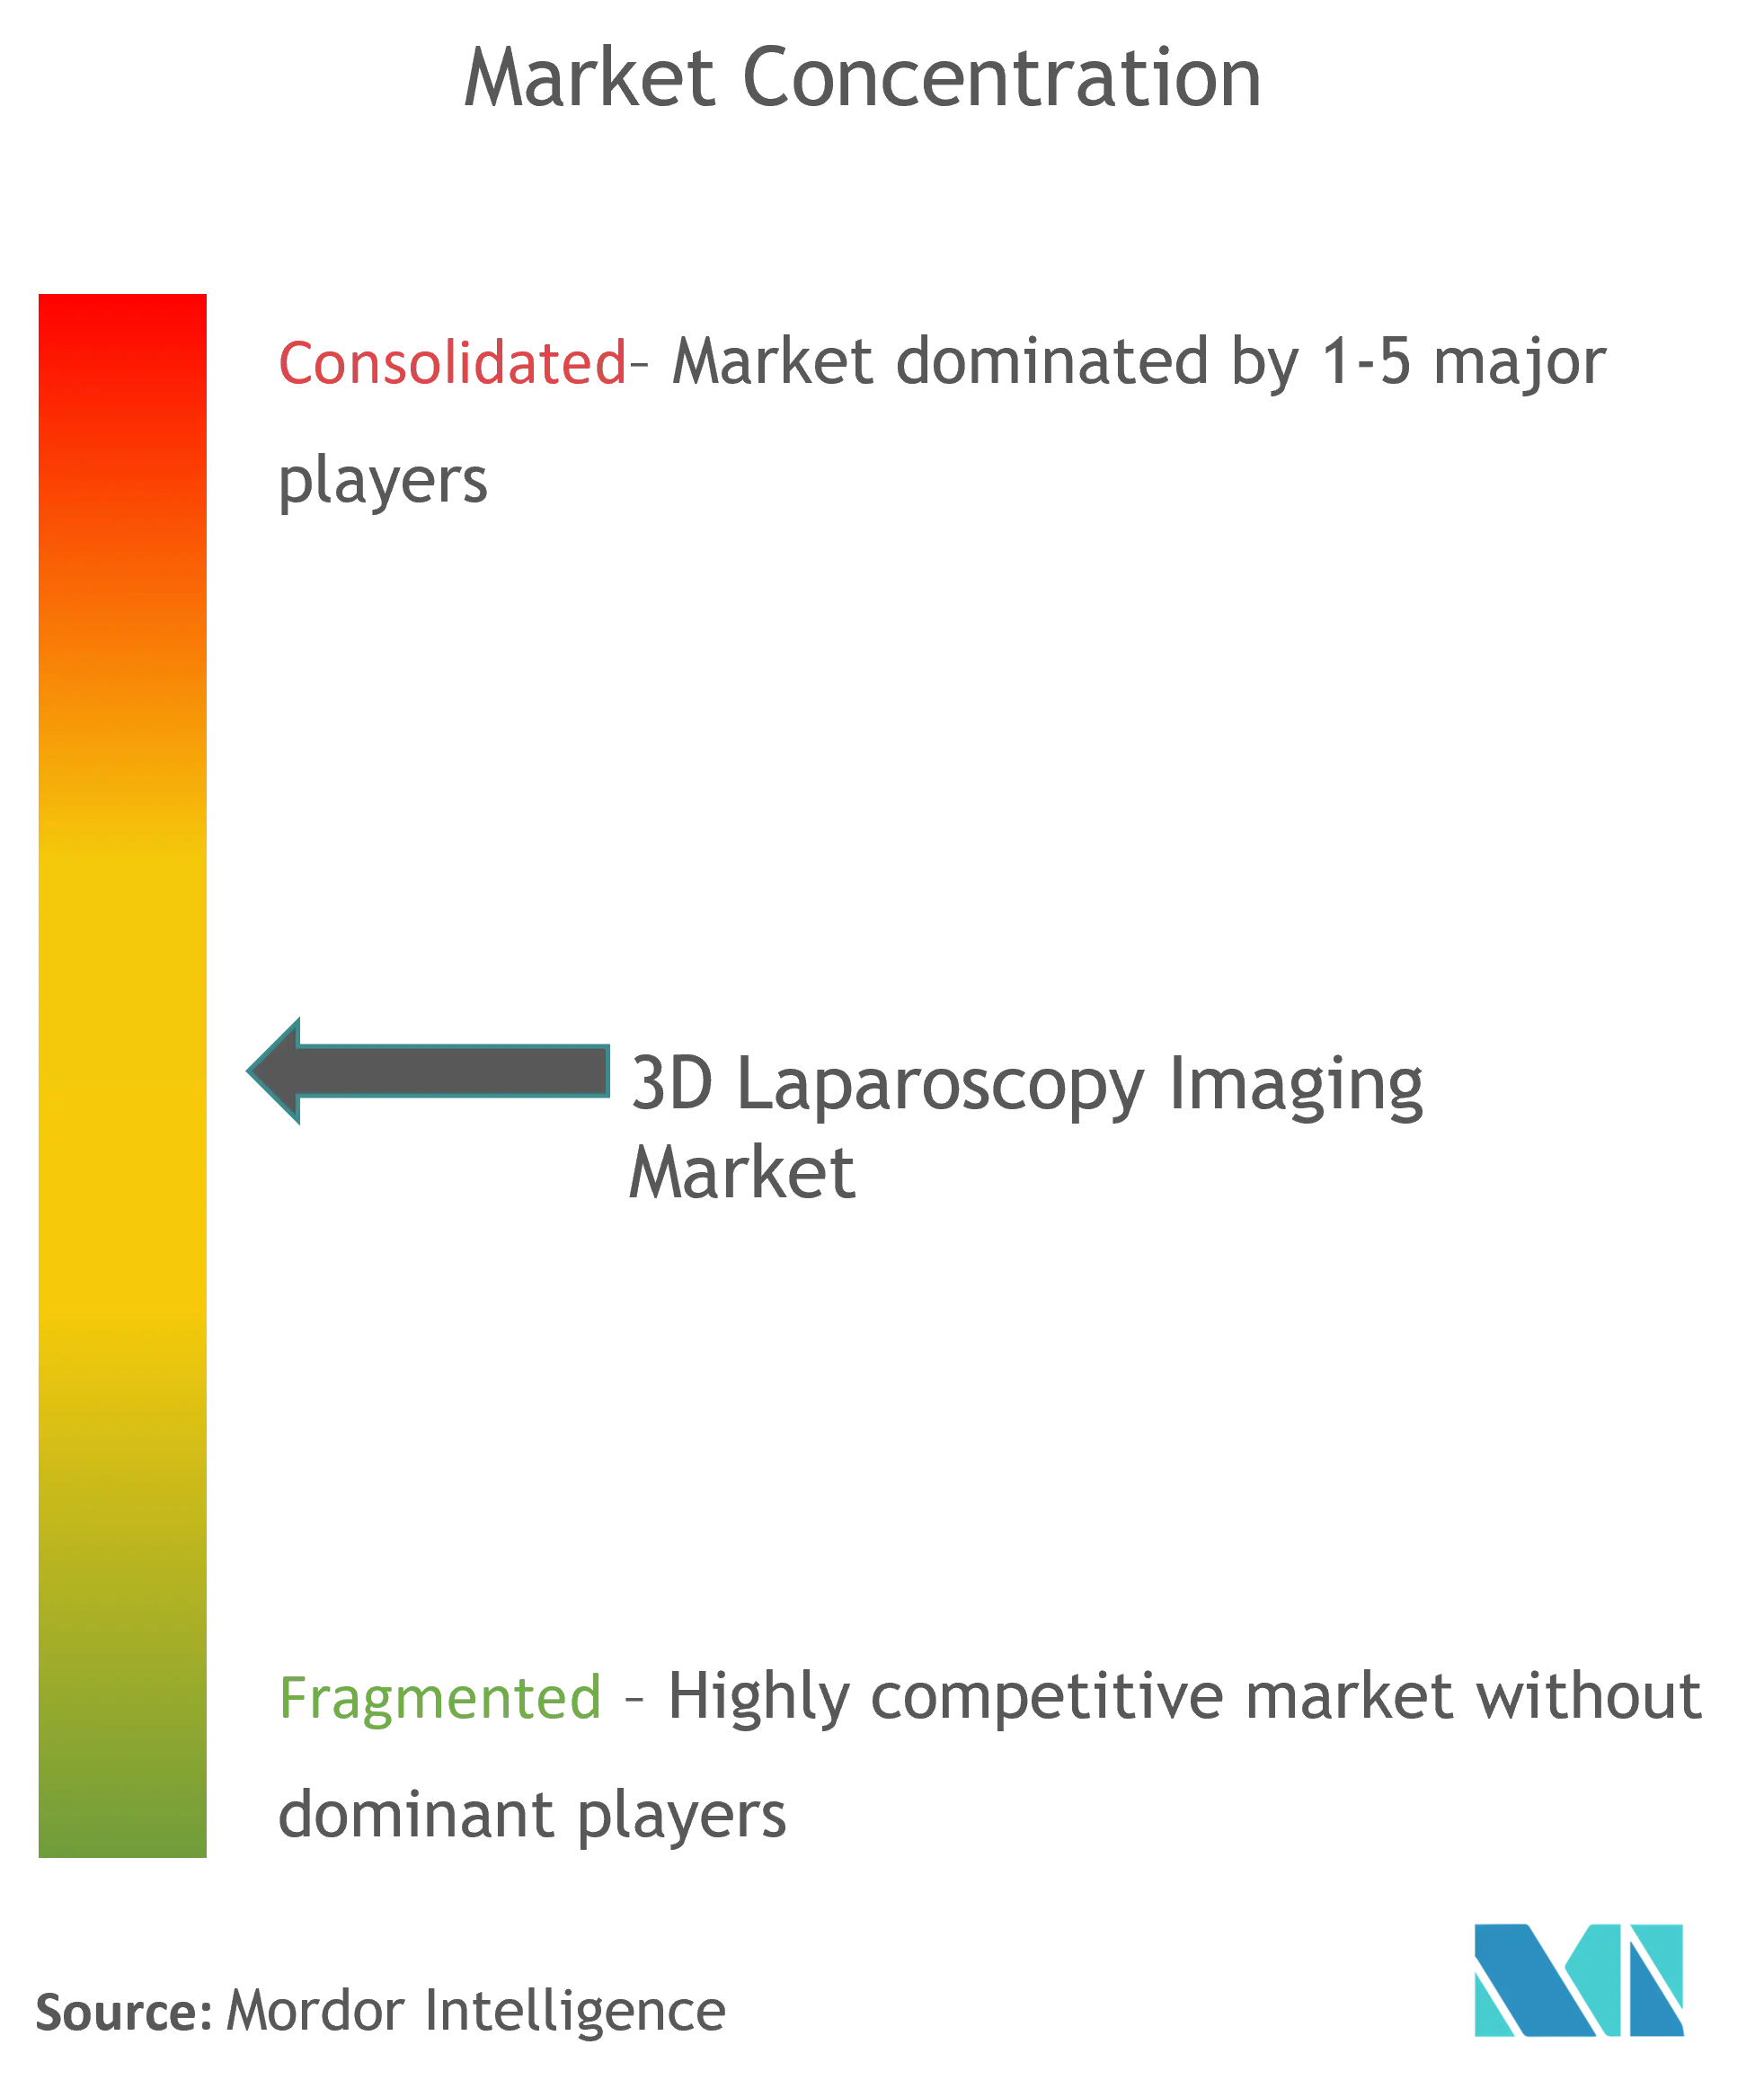 Global 3D Laparoscopy Imaging Market Concentration